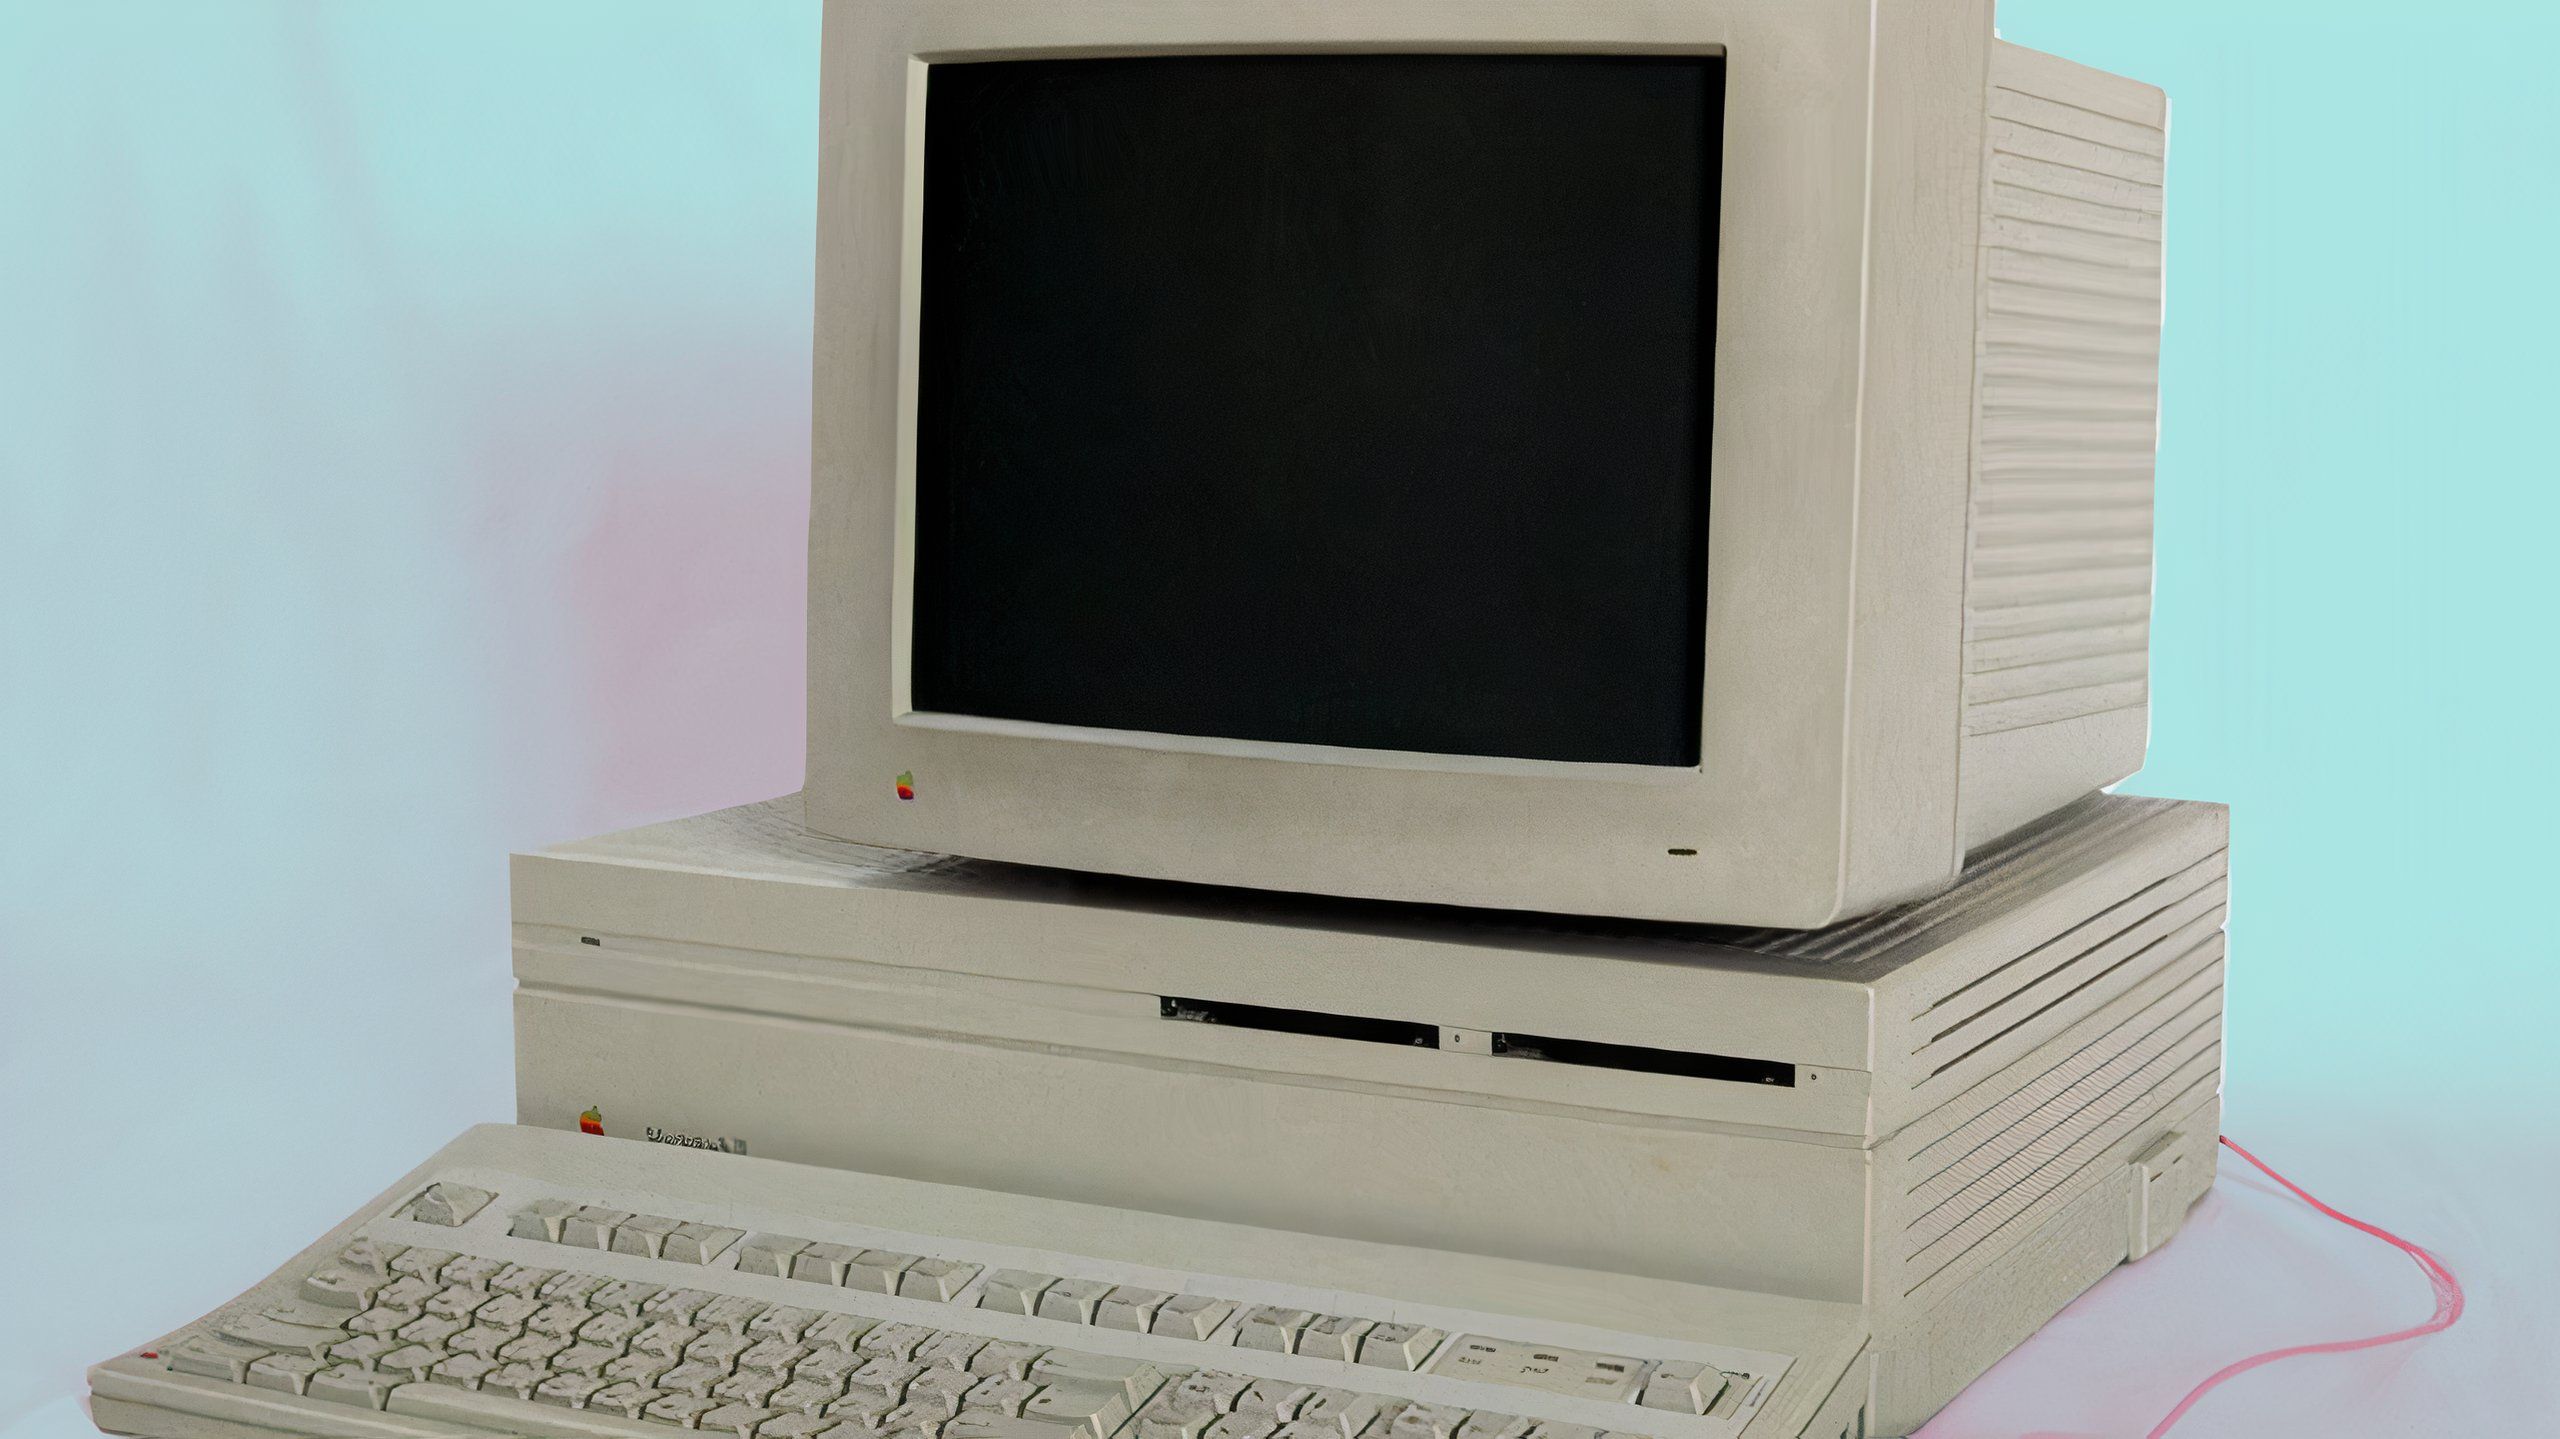 The mac 2 computer